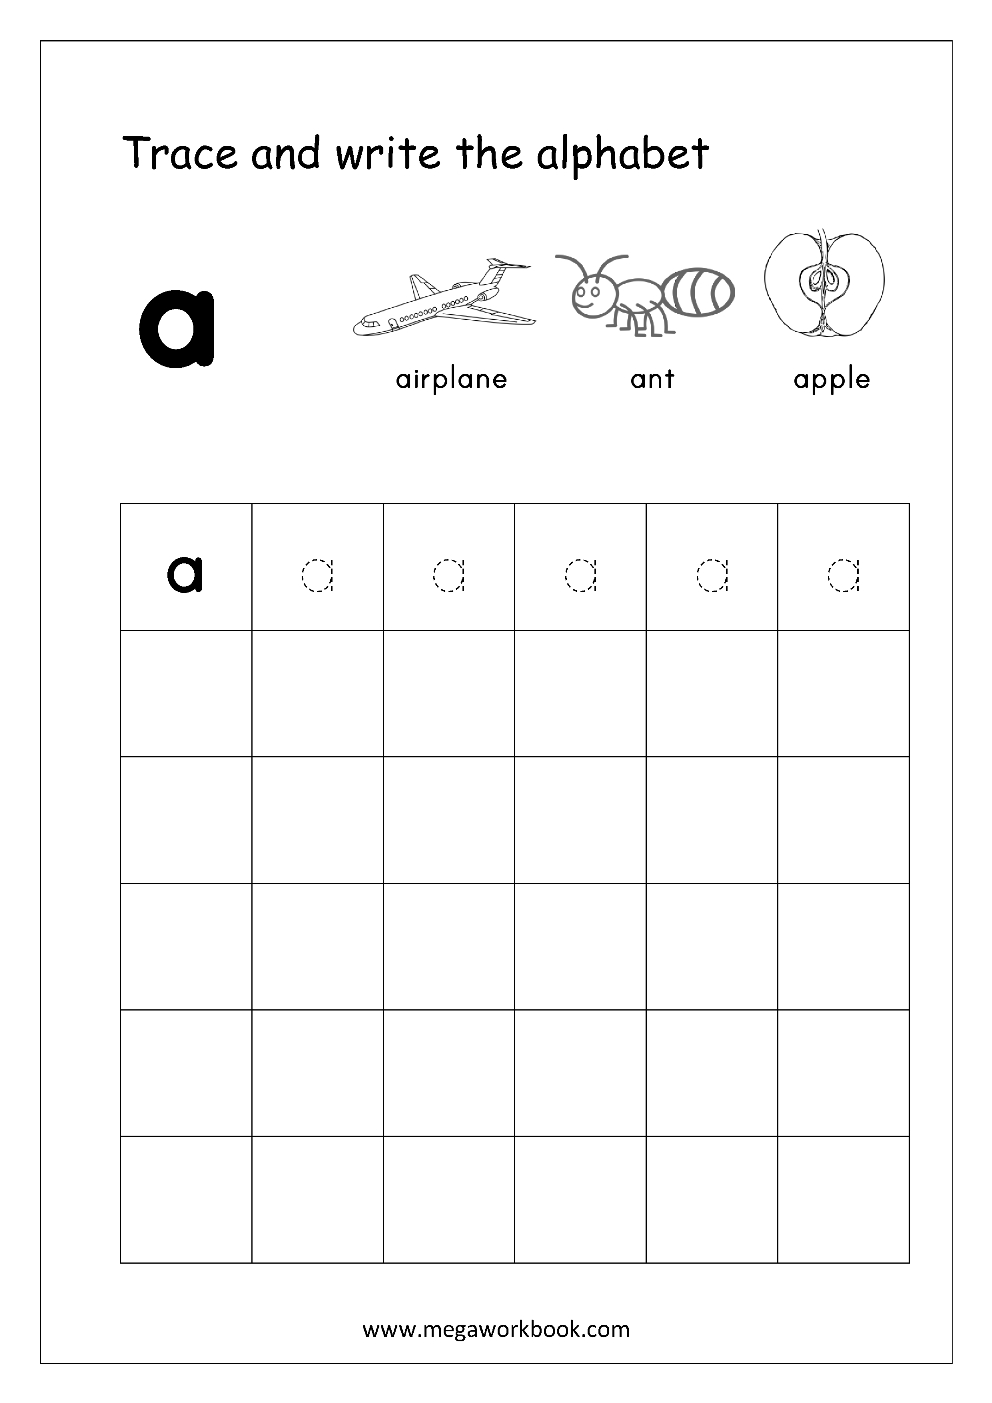 Free English Worksheets - Alphabet Writing (Small Letters intended for Small Letters Alphabet Tracing Sheets